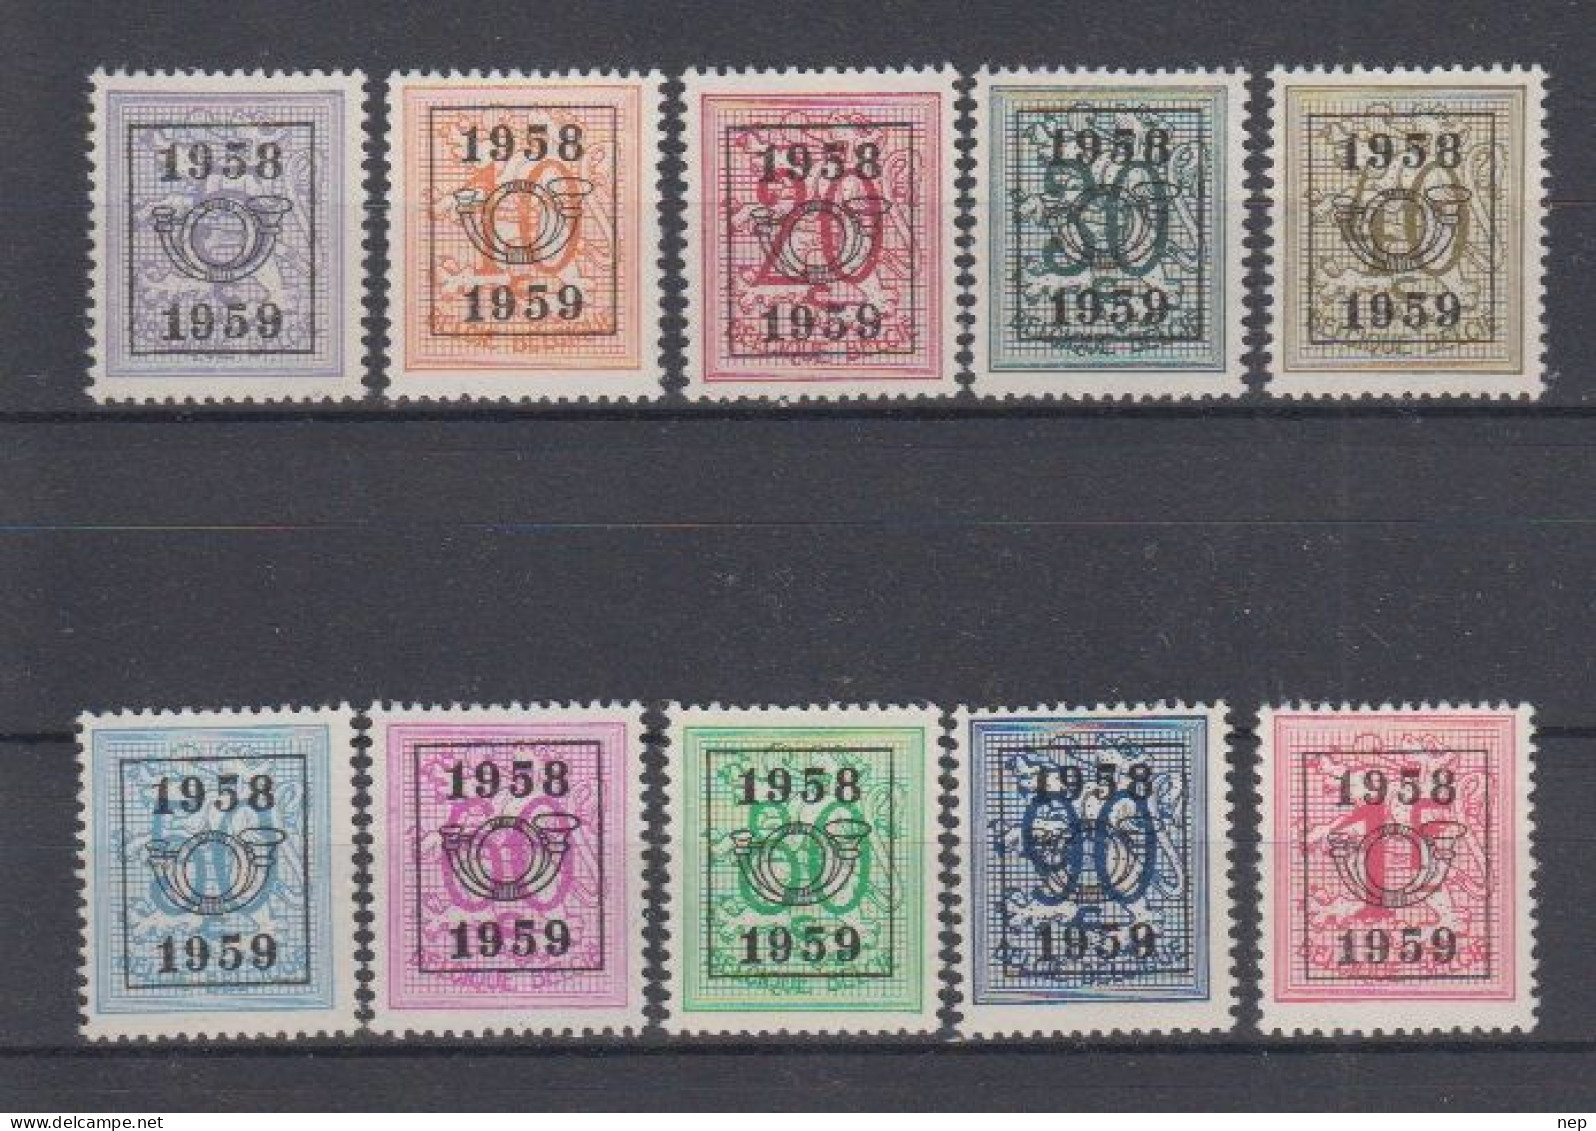 BELGIË - OBP - 1958 - PRE 676/85 (51 Type E) - MNH** - Typo Precancels 1951-80 (Figure On Lion)